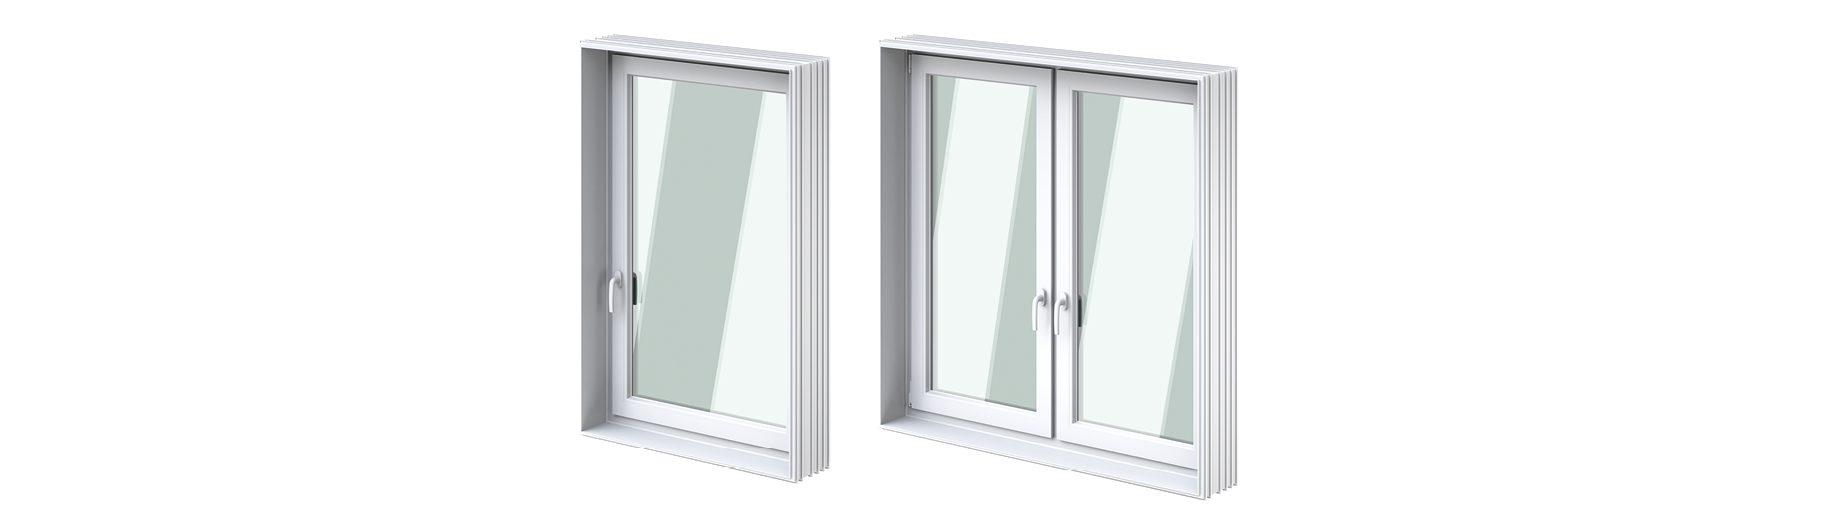 Aco-them-leibungsfenster-großformate-header-1370x390-3